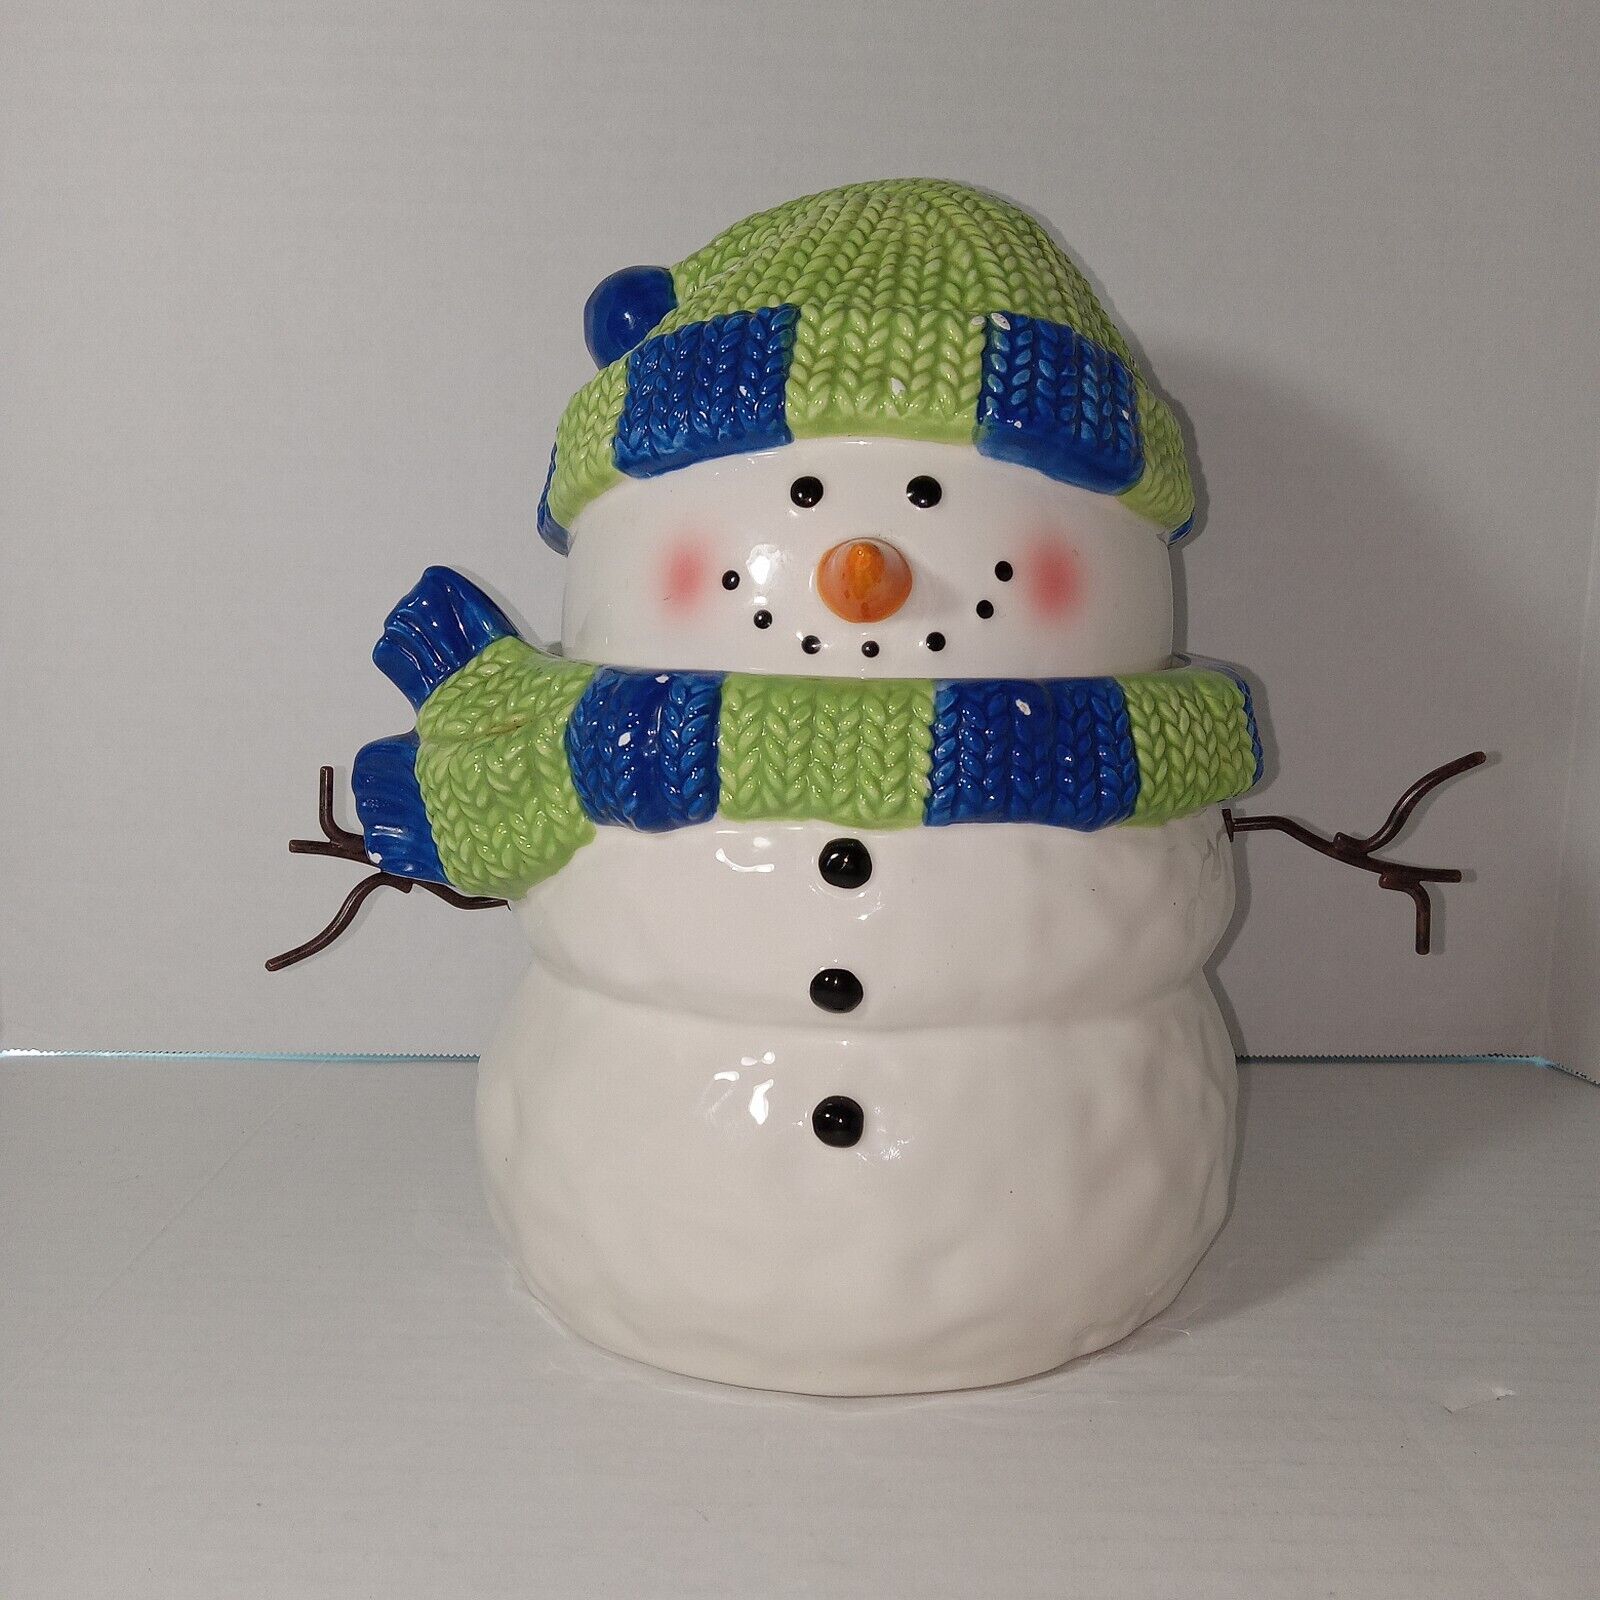 Scentsy Host Exclusive Snowman Cookie Jar RETIRED